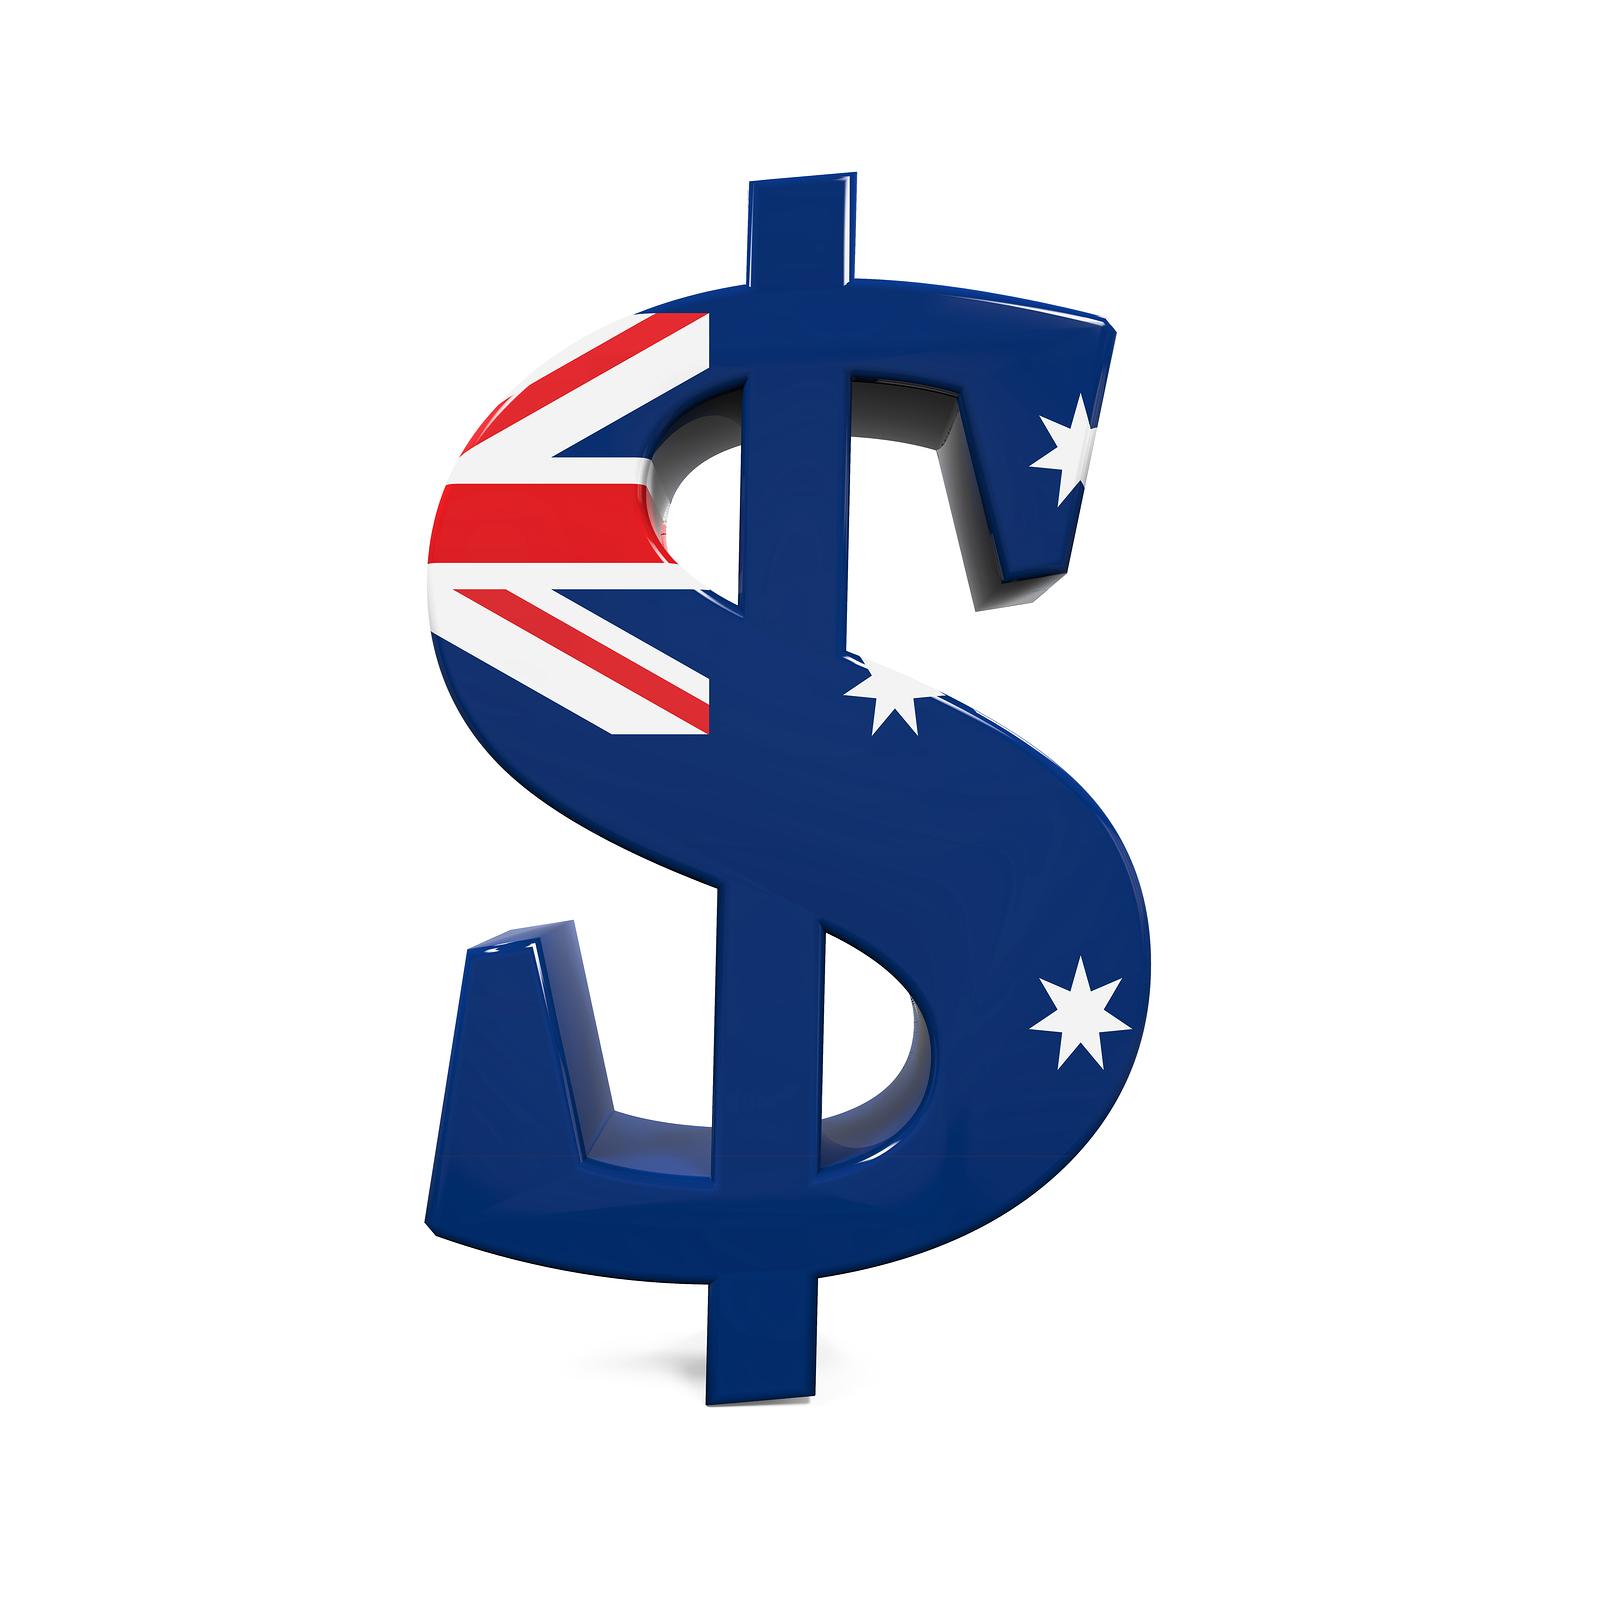 Us Currency Logo - Aussie Climbs, Kiwi Falls Against the U.S. Dollar